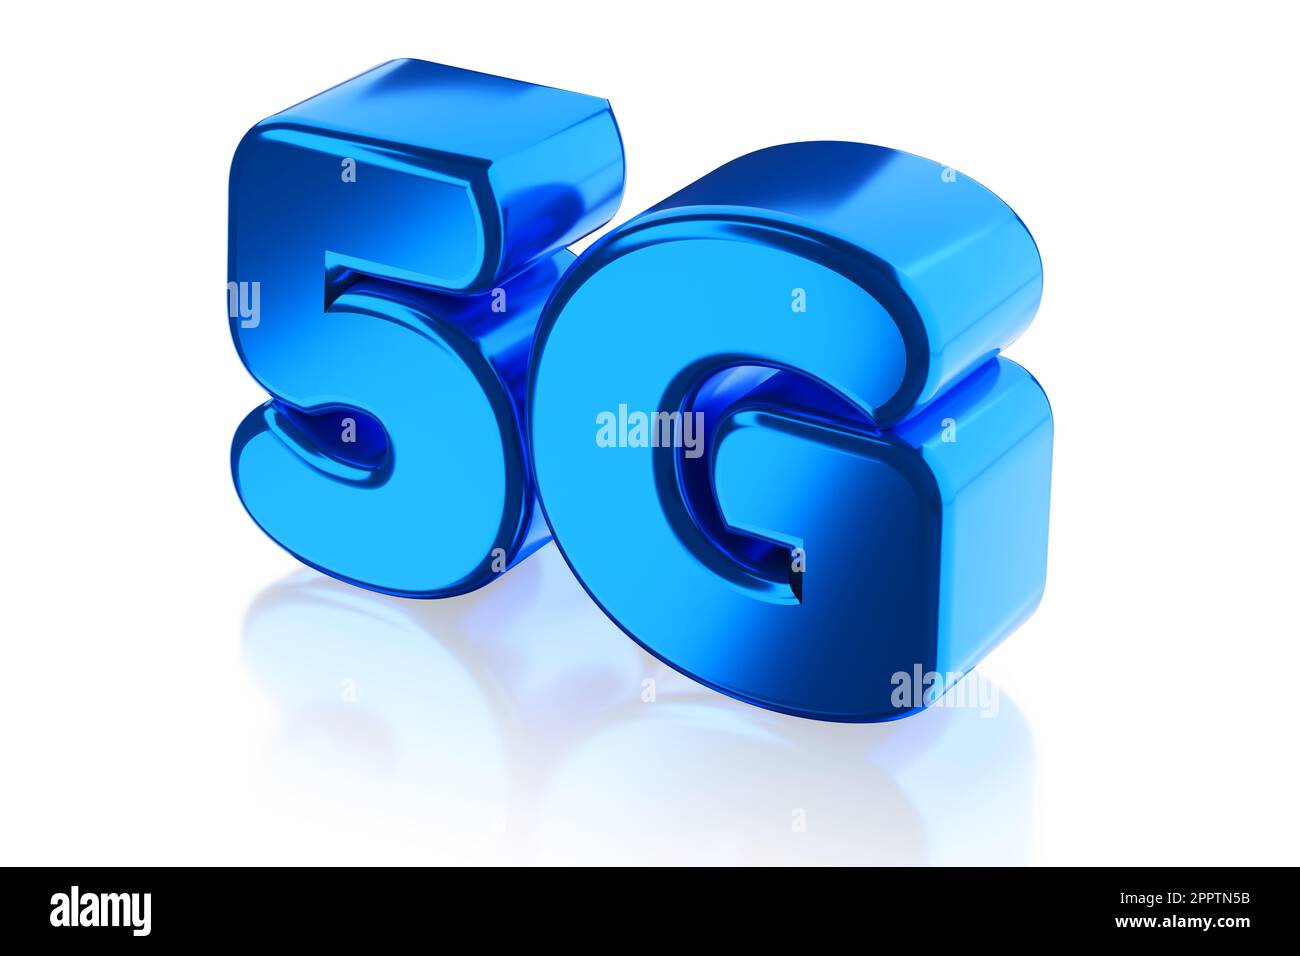 Blue metallic 5G wireless communication technology logo, symbol, icon isolated on white. 3d rendering illustration. Stock Photo